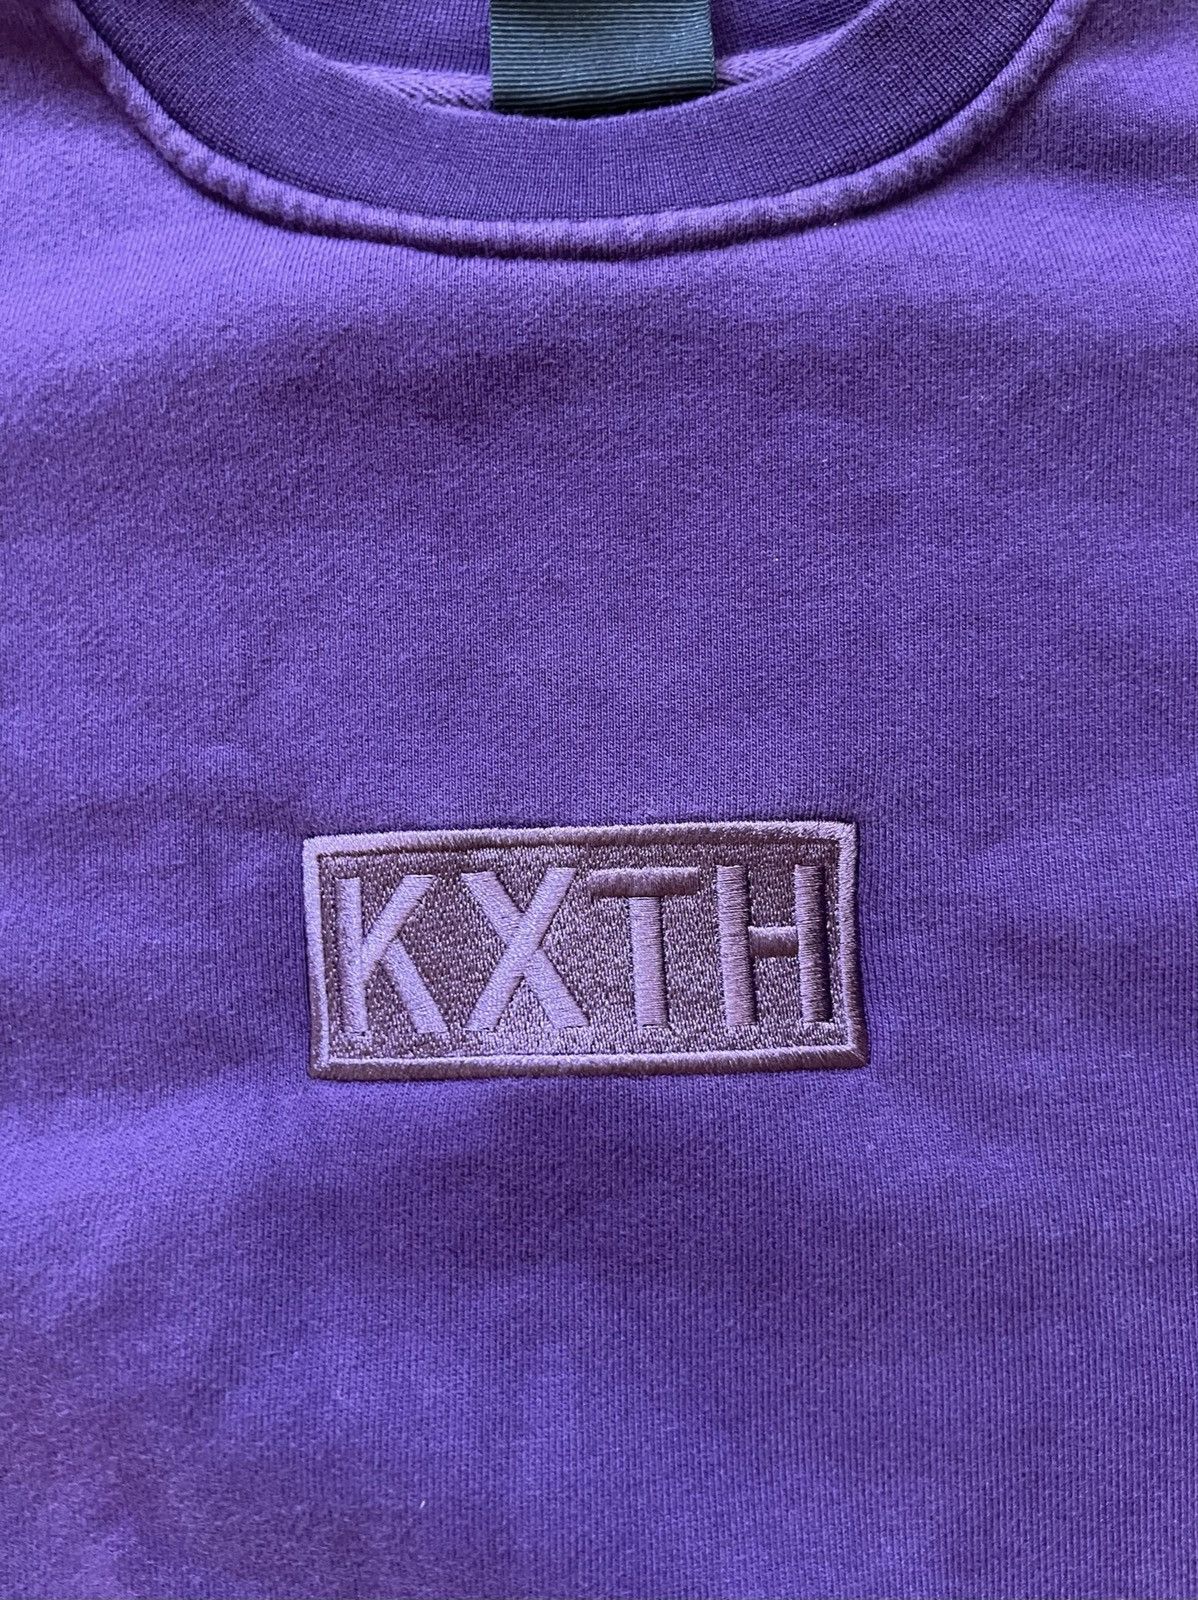 Kith Kith Cyber Monday Crewneck Tyre Purple | Grailed